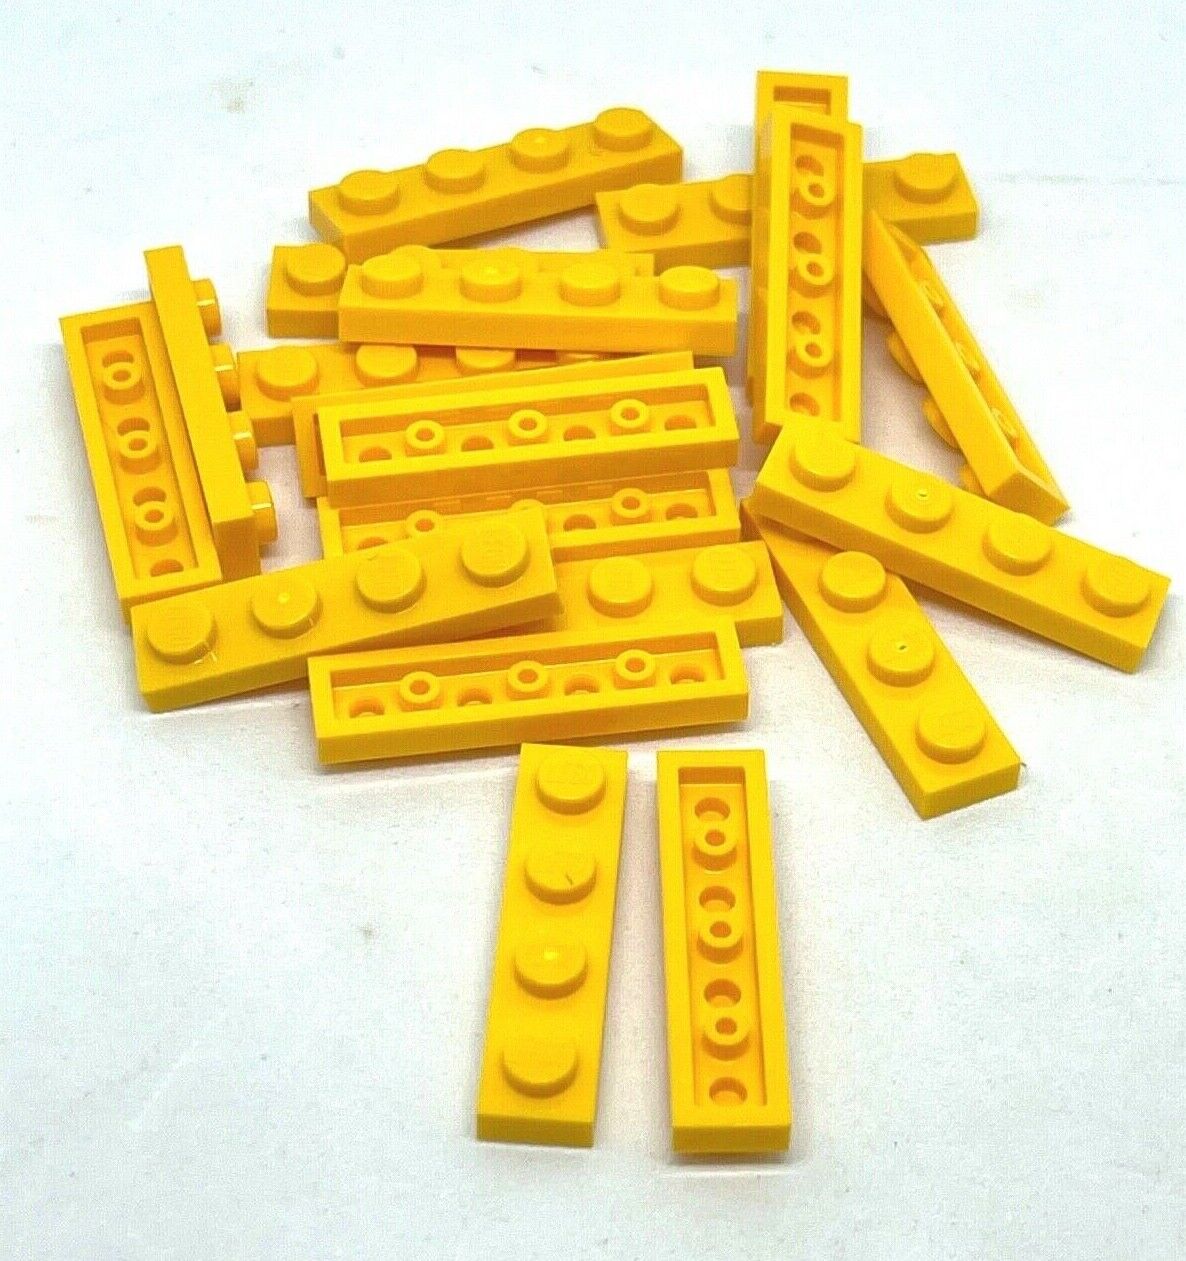 1X4 Lego 20 Piece Bulk Lot 1 x 4 Flat Plates BRIGHT LIGHT ORANGE #3710 LEGO Does Not Apply